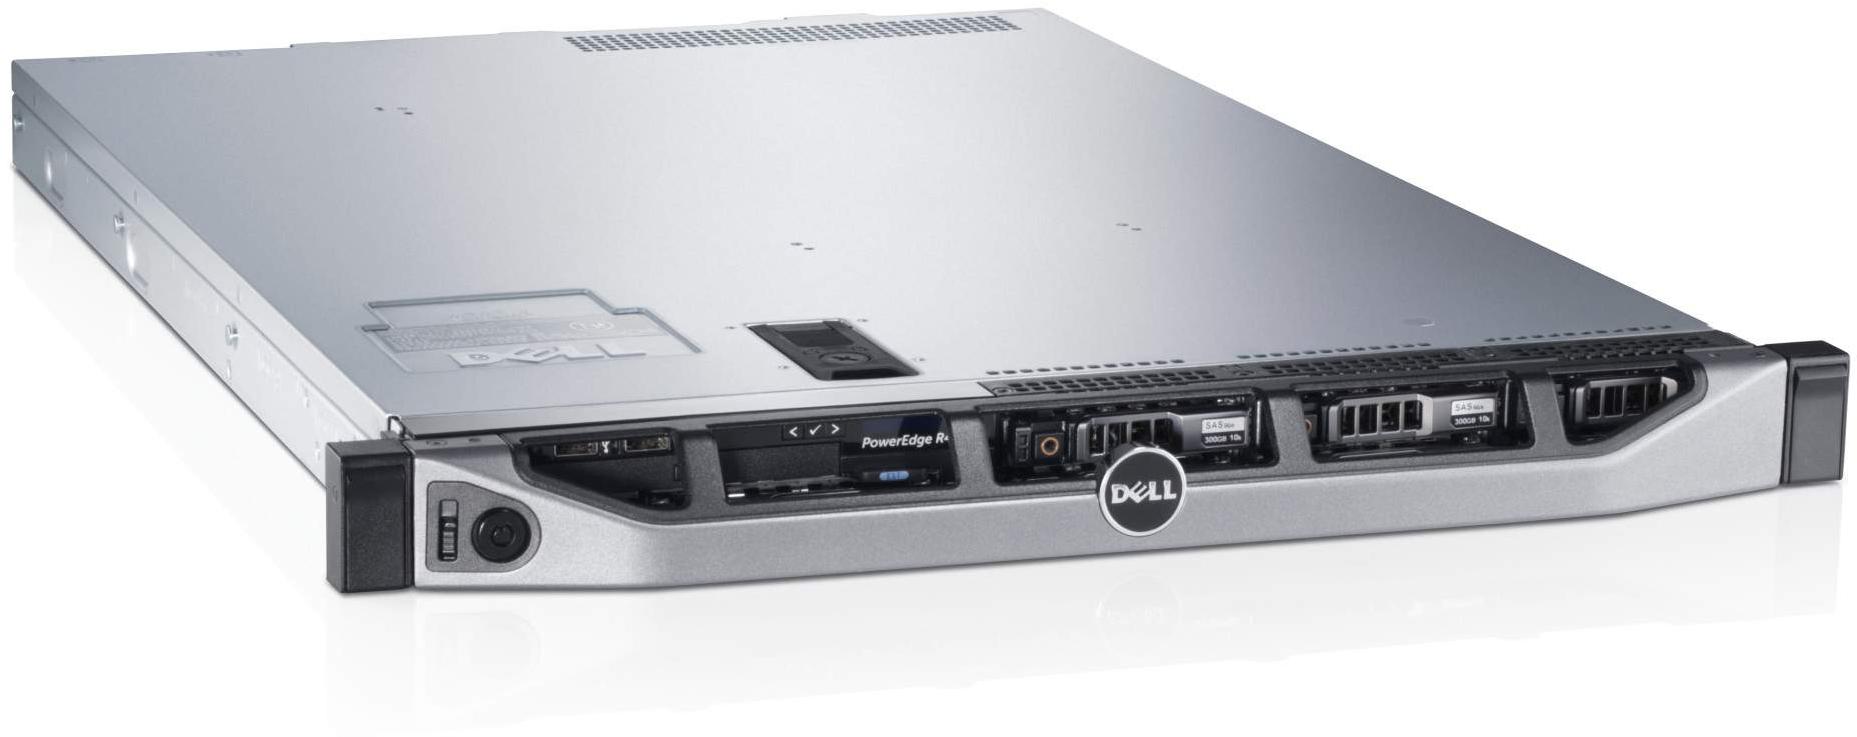     Dell PowerEdge R620 (210-ABMW-28)  2